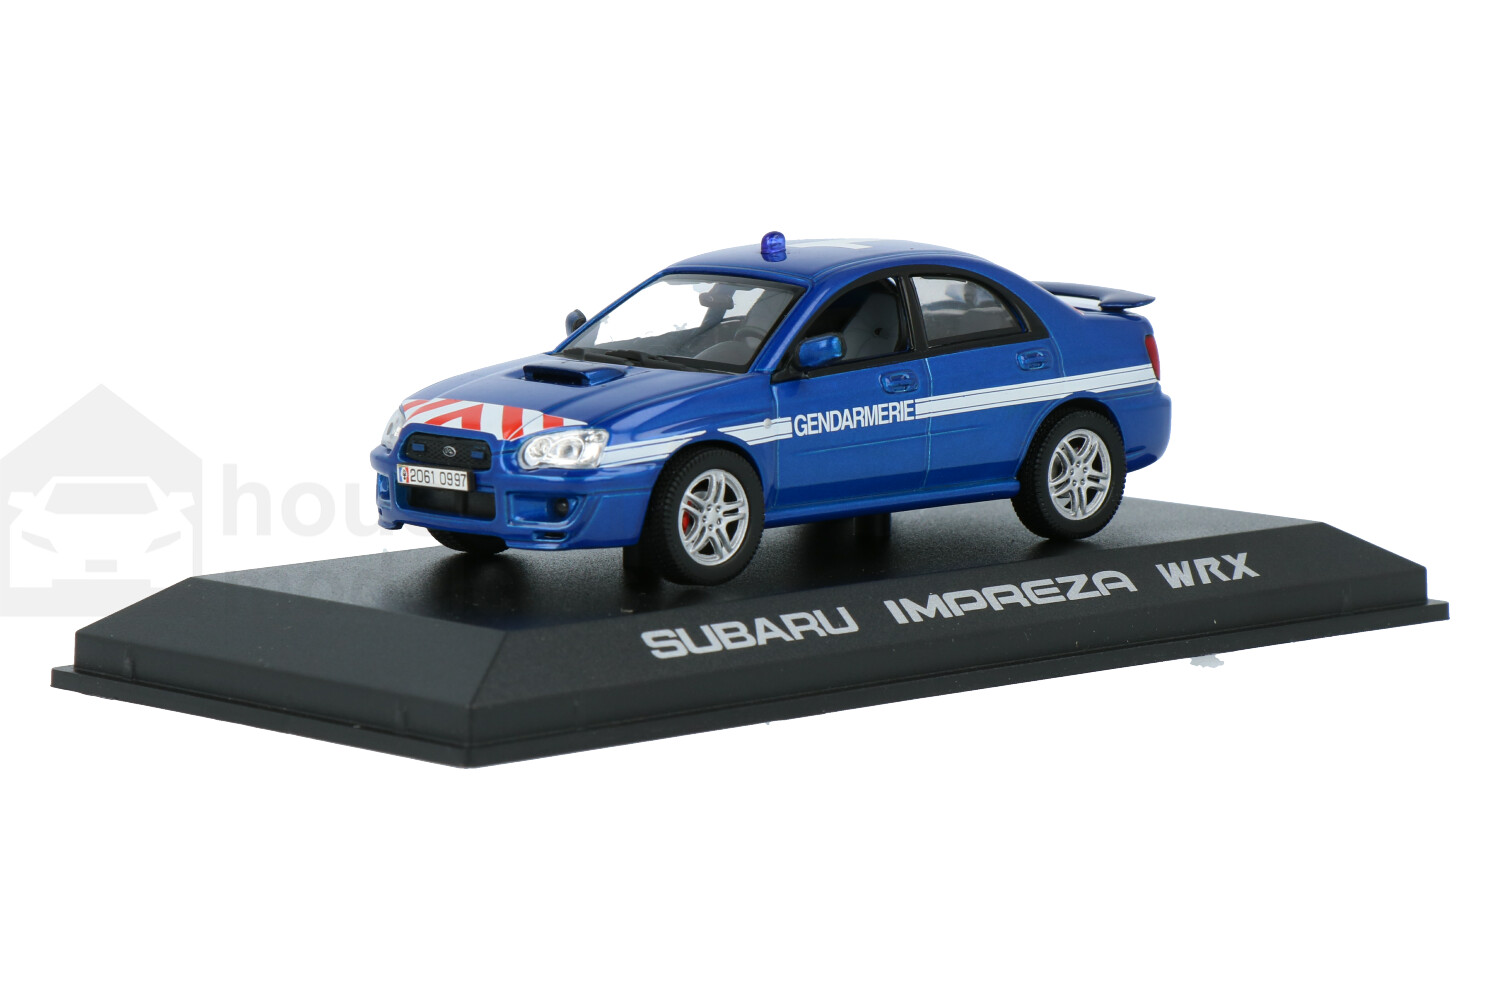 Subaru Impreza WRX - Modelauto schaal 1:43